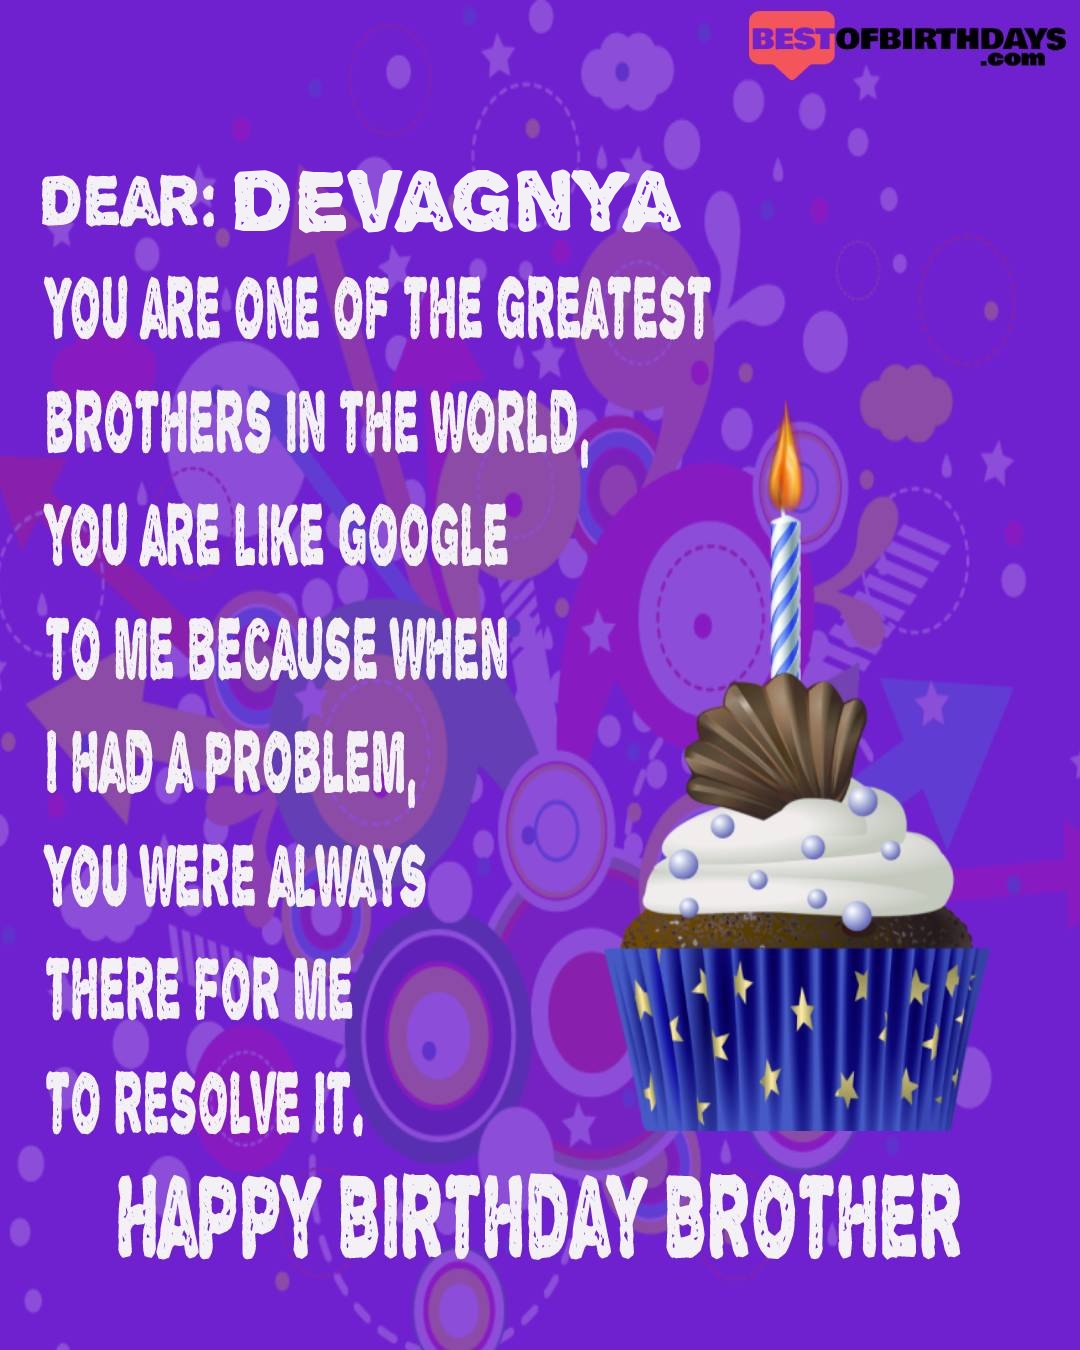 Happy birthday devagnya bhai brother bro